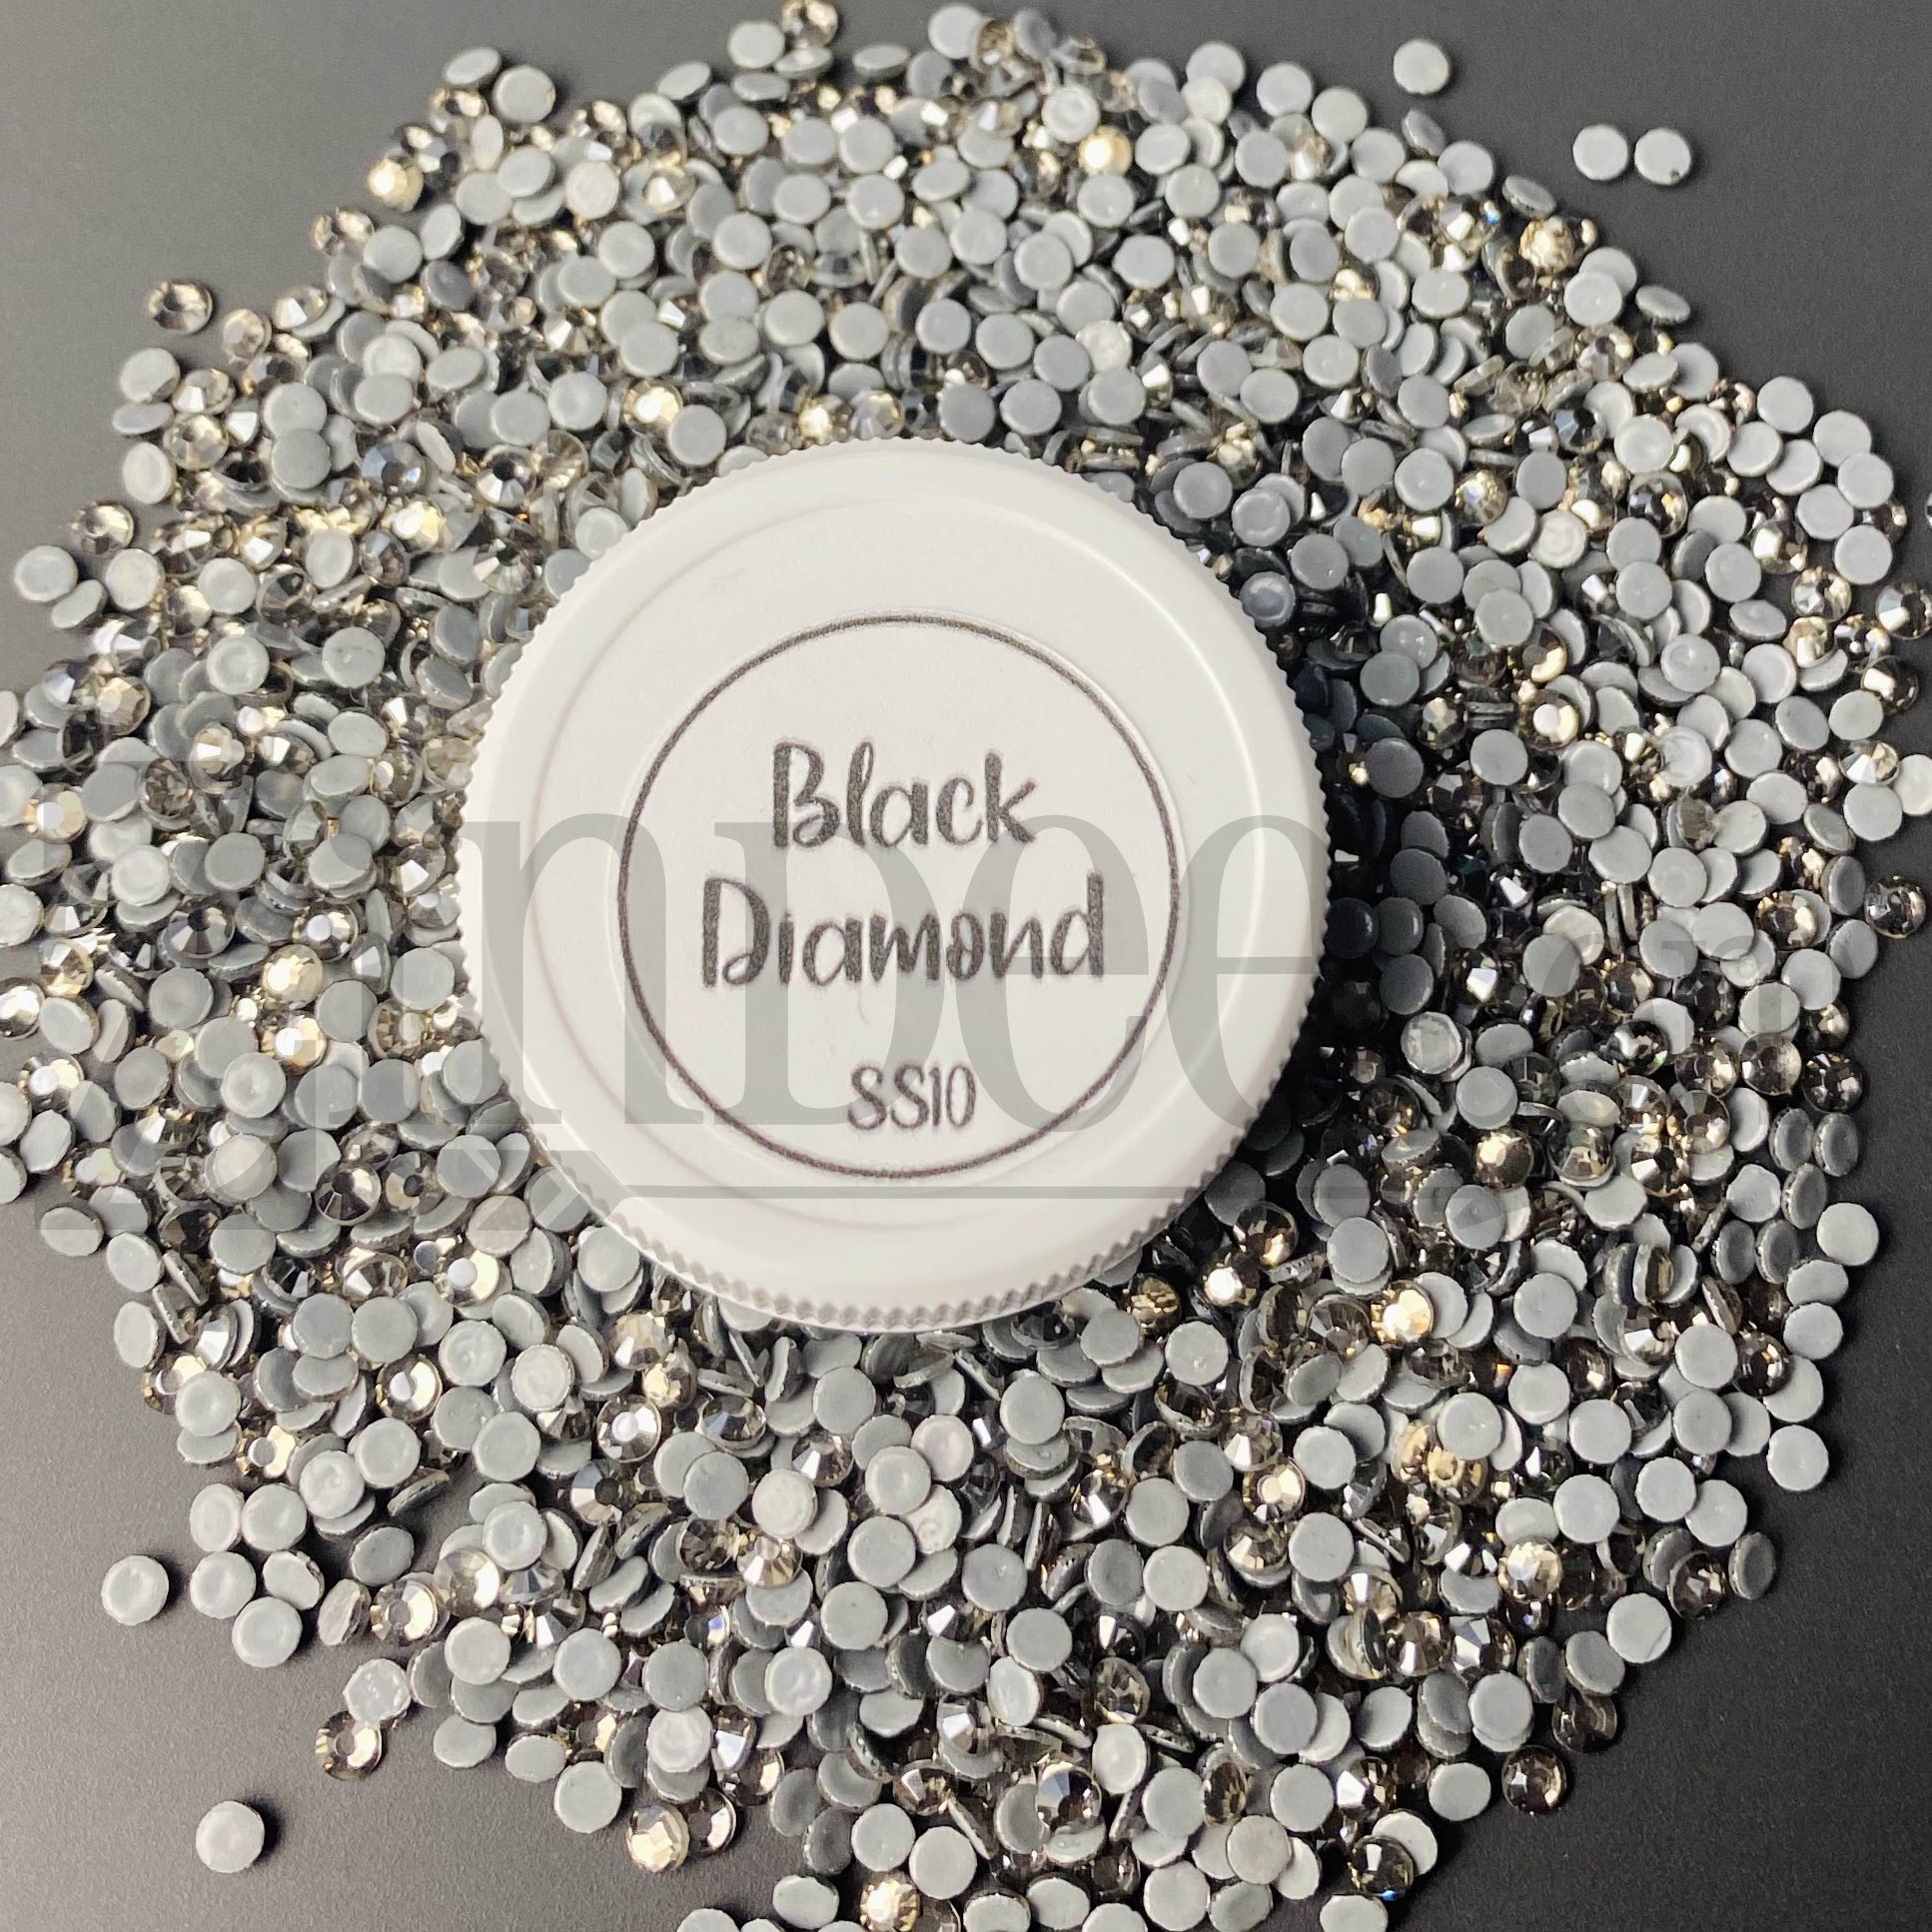 Black diamond Hotfix Rhinestone ss10 (machine cut) 10 Gross –